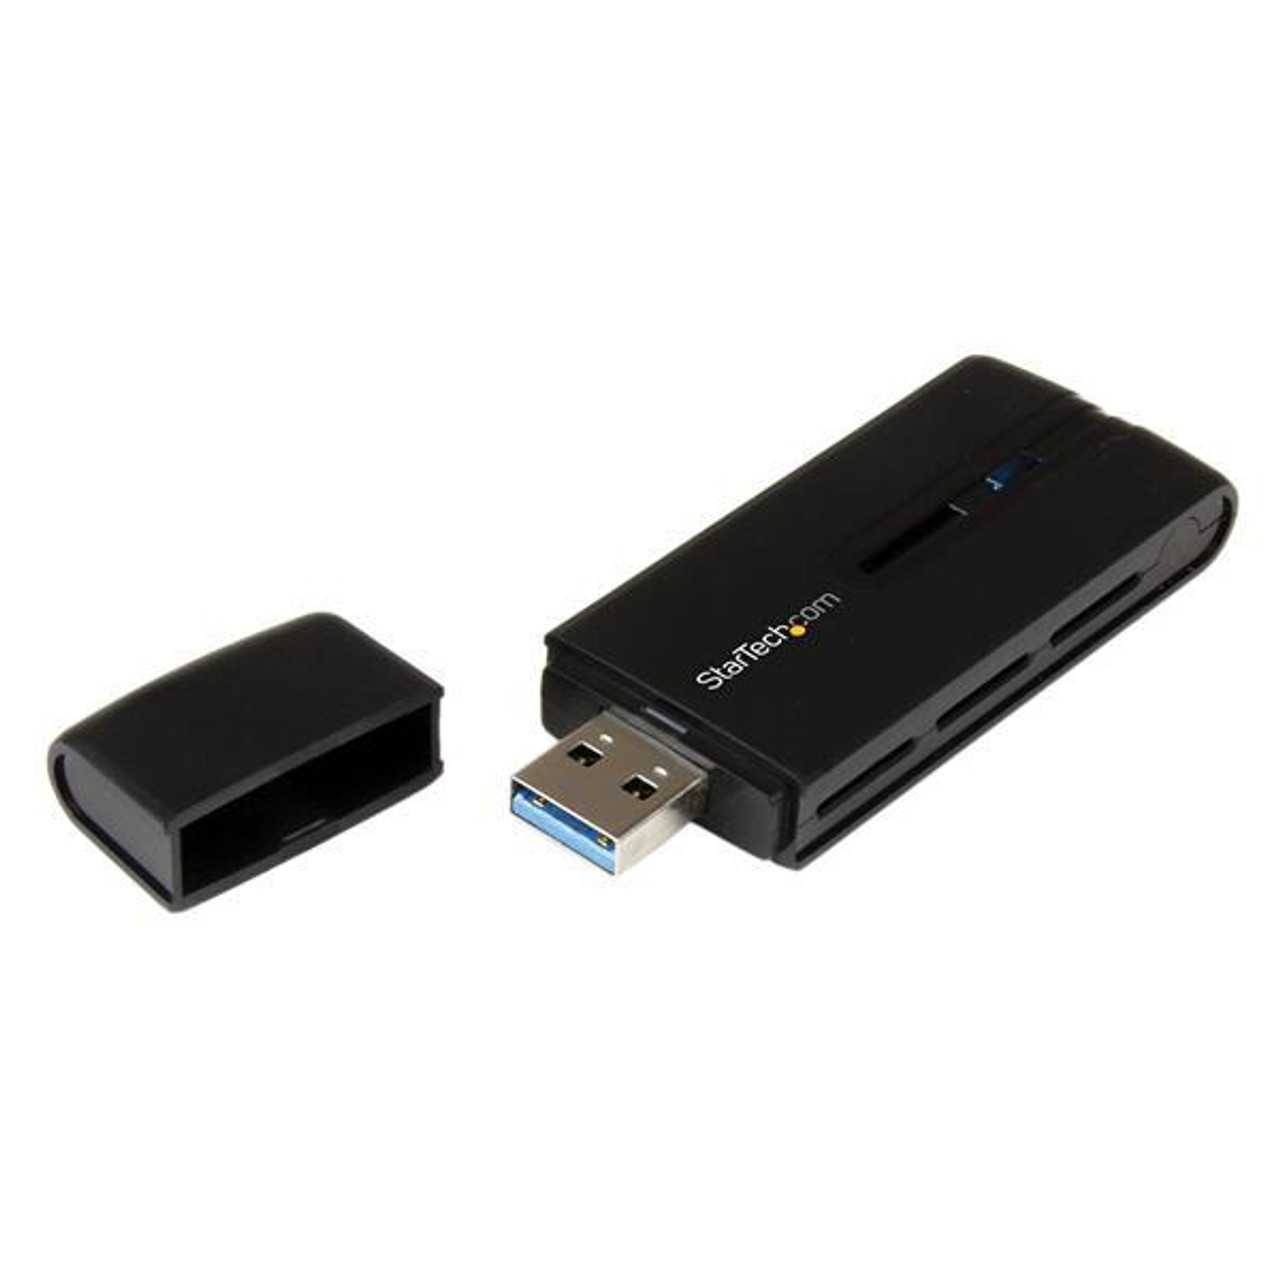 USB867WAC22 StarTech AC1200 802.11ac WiFi Dual Band USB 3.0 Wireless-AC Network Adapter